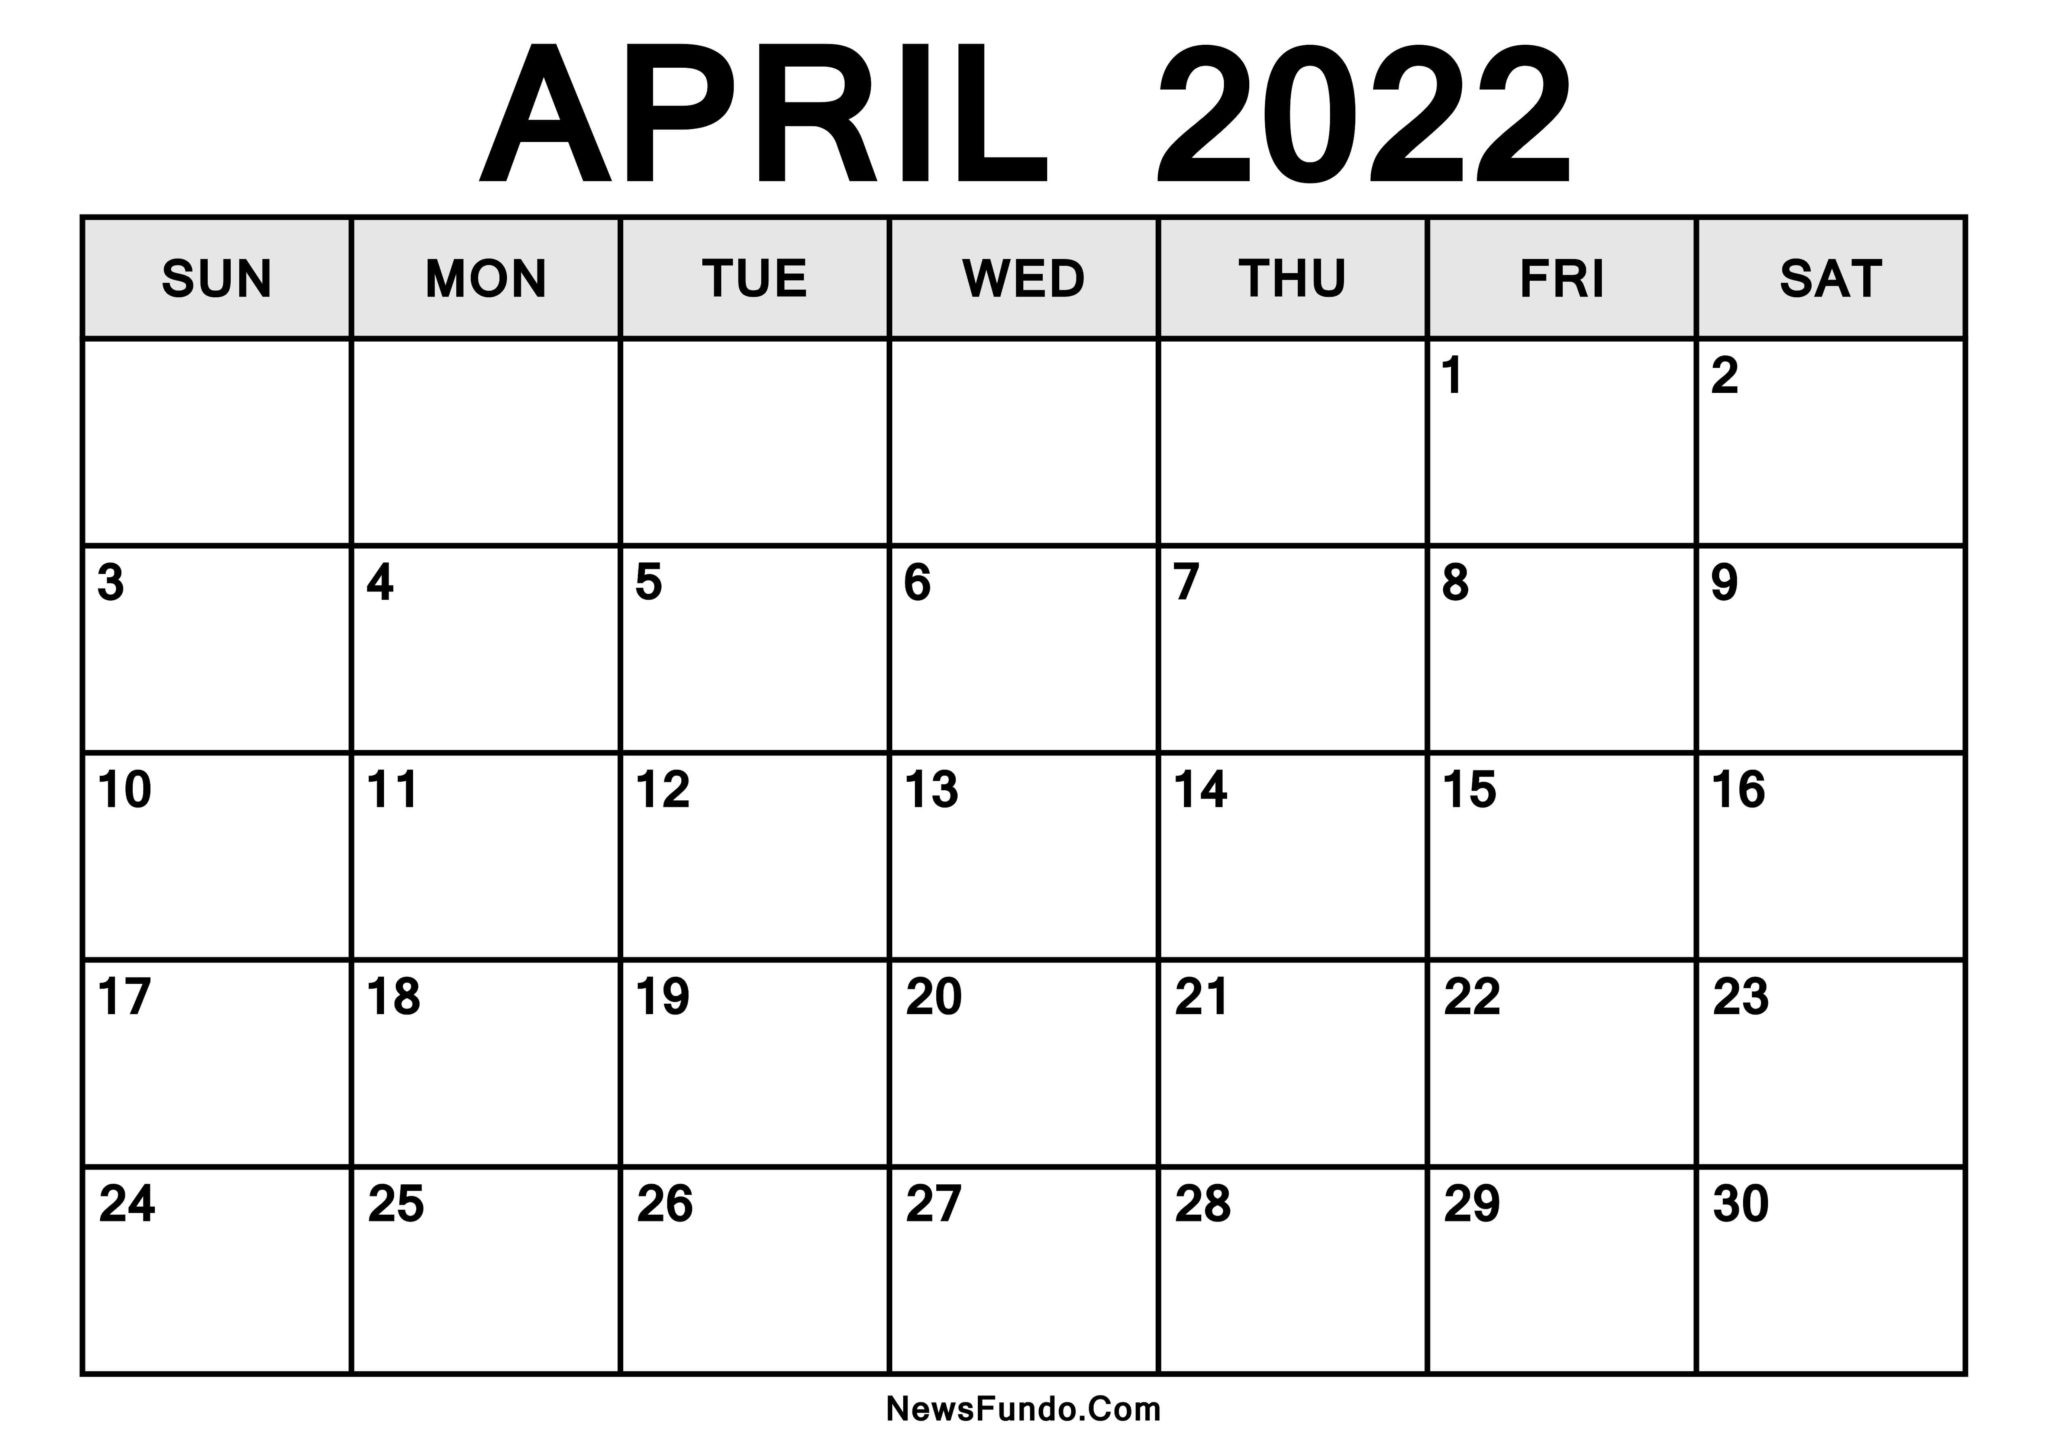 April 2022 Calendar Template Printable - Print Now  November 2022 To April 2022 Calendar